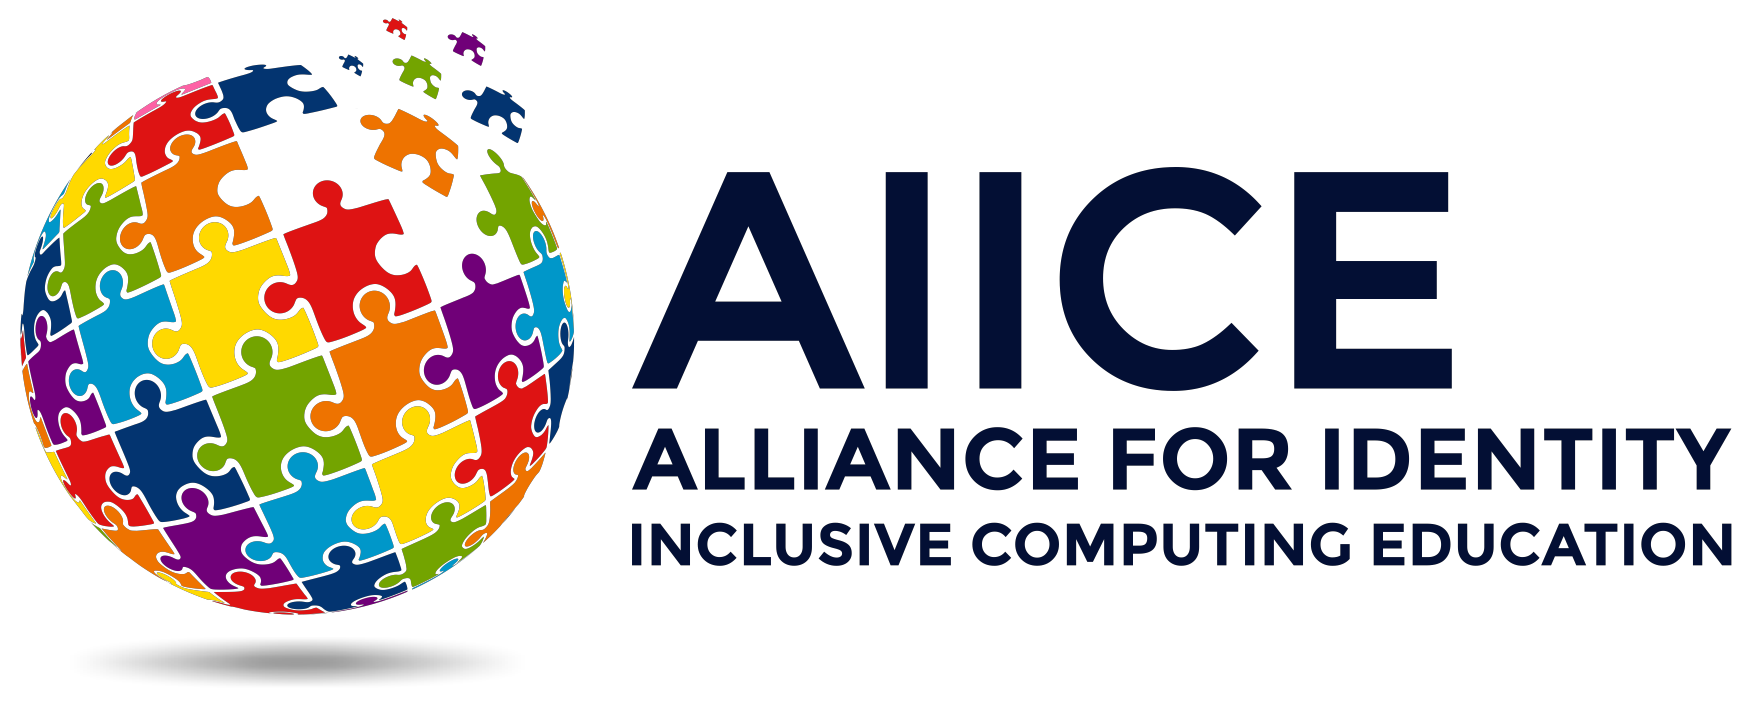 Alliance for Identity-Inclusive Computing Education (AiiCE) logo